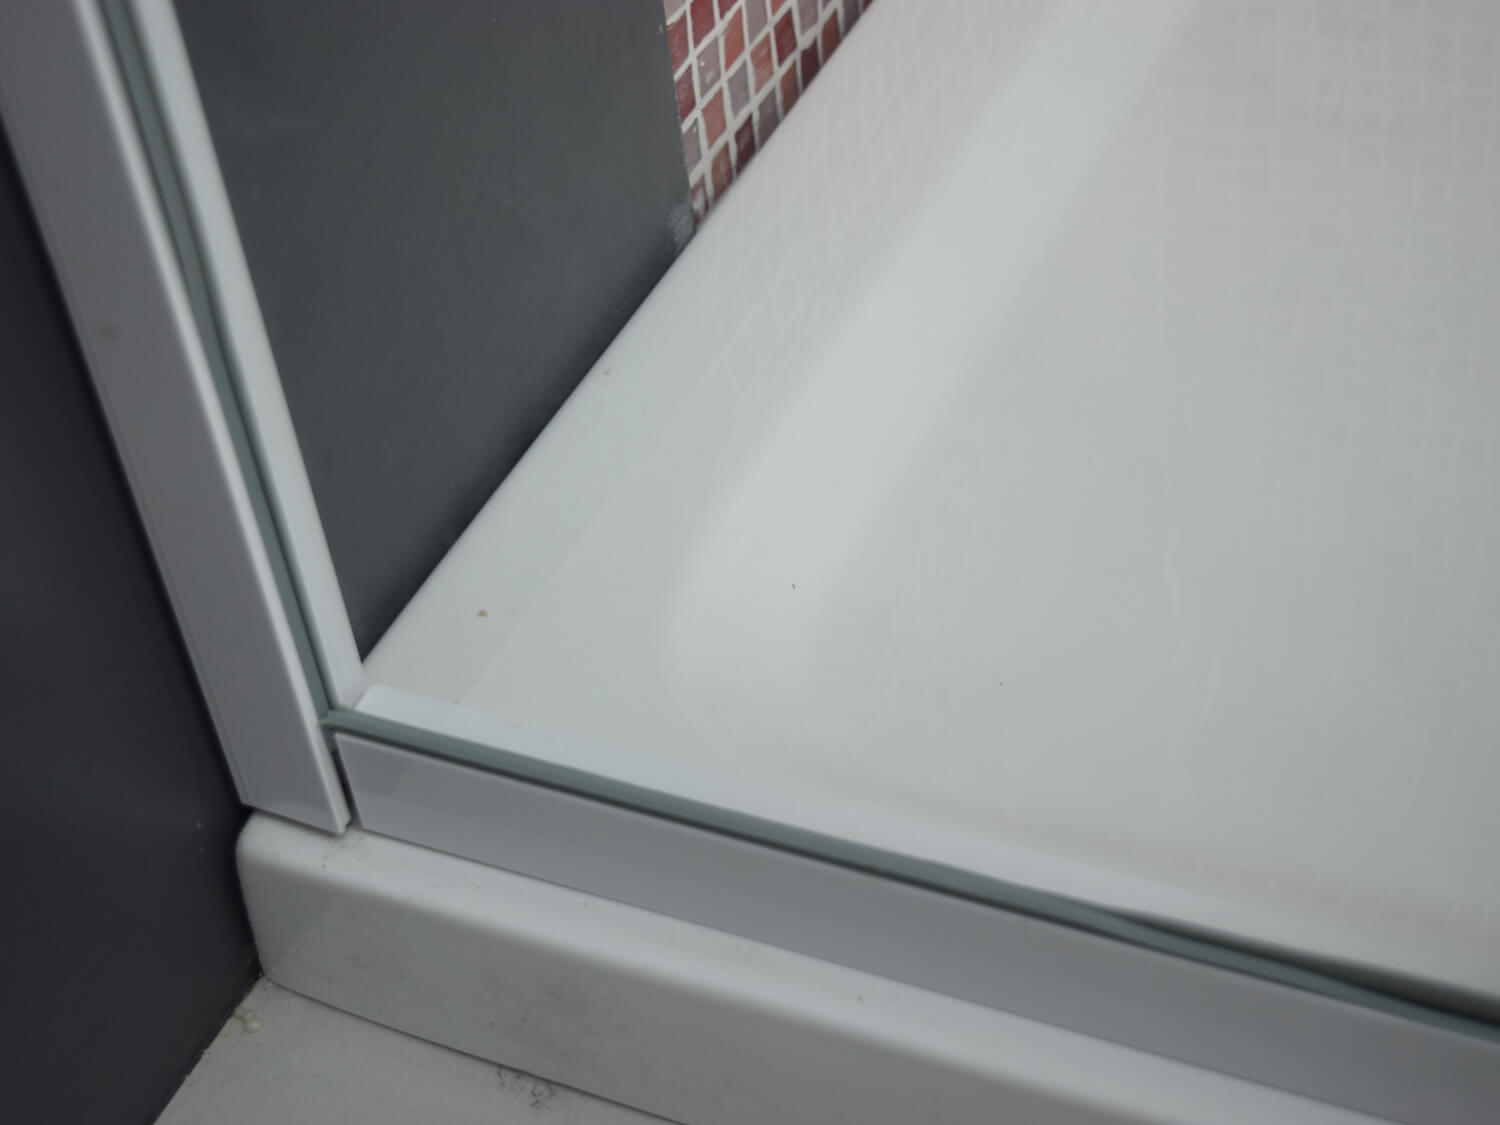 Quadrant White Shower Enclosure - 900 x 900 x 1850 x 6mm